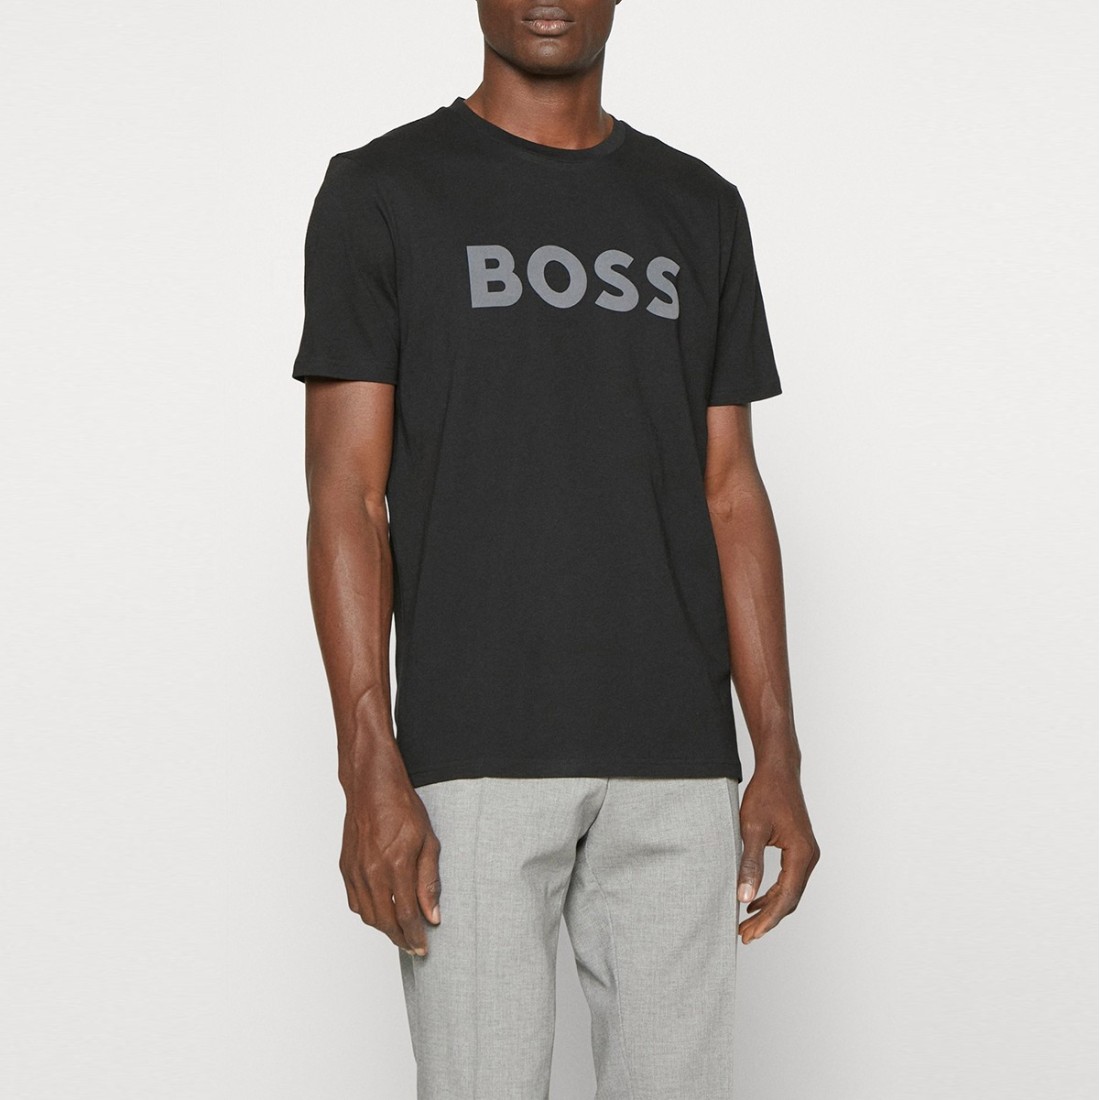 Image of BOSS - T-shirt Thinking - Colore: Nero,Taglia: XXL